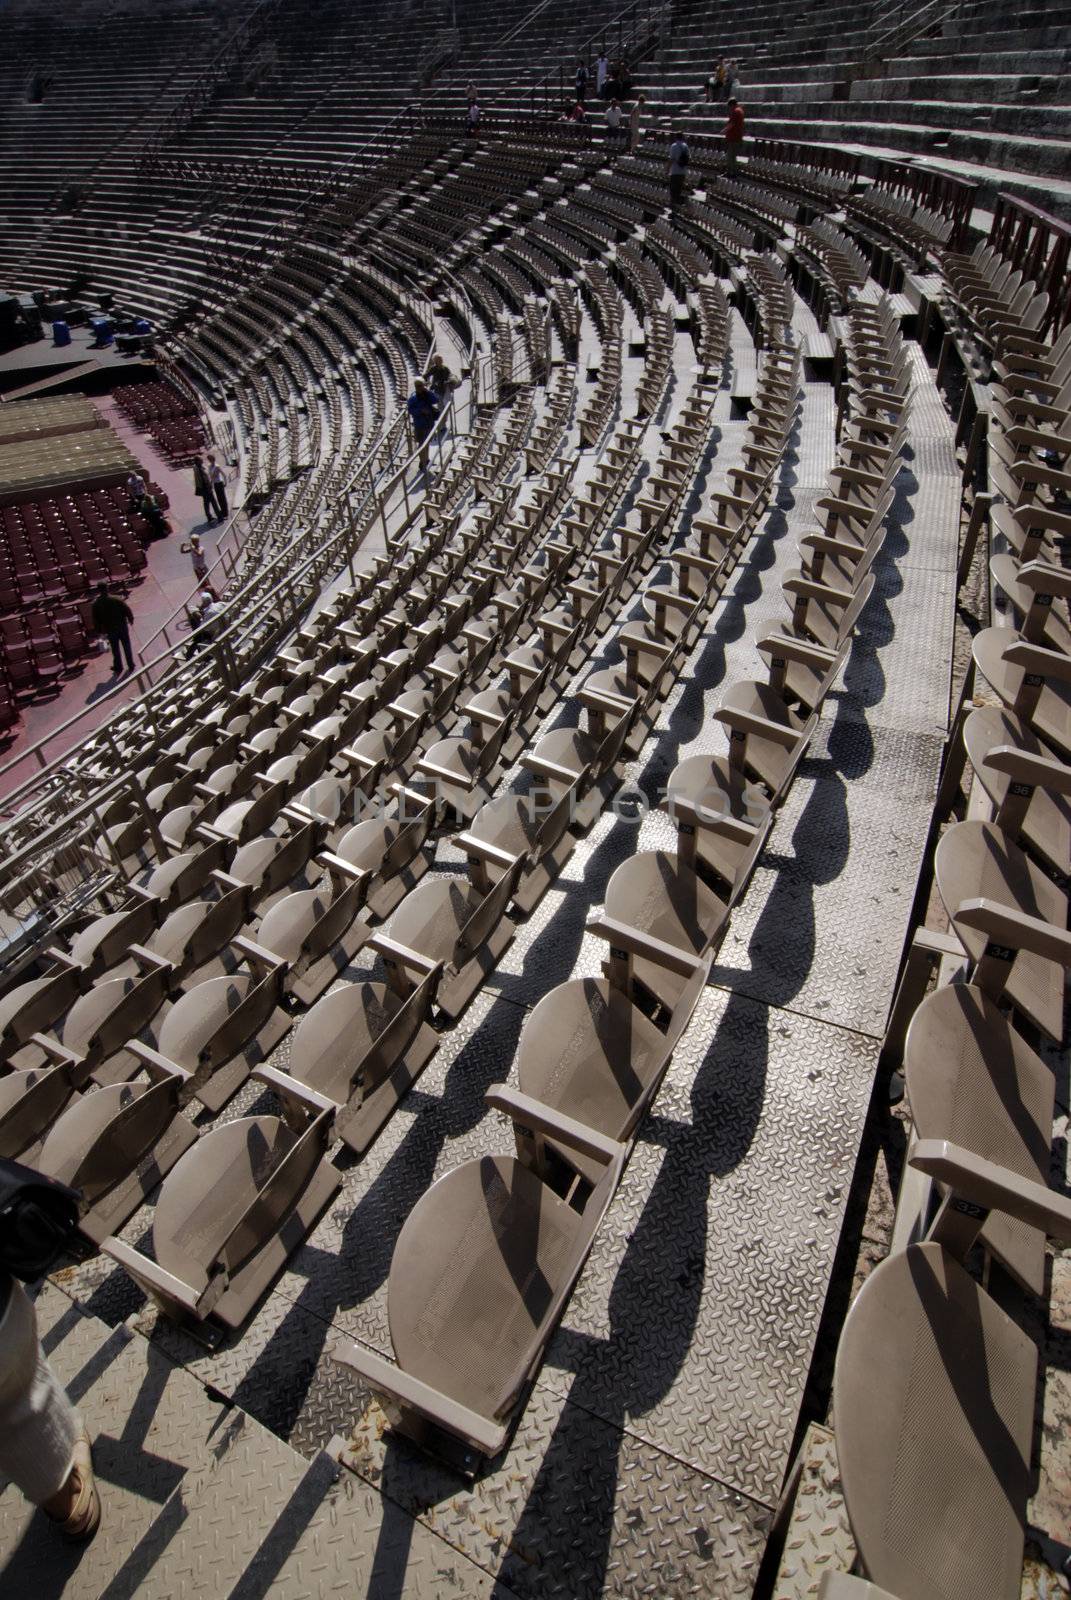 Amphitheatre seats of Verona Arena. Italy